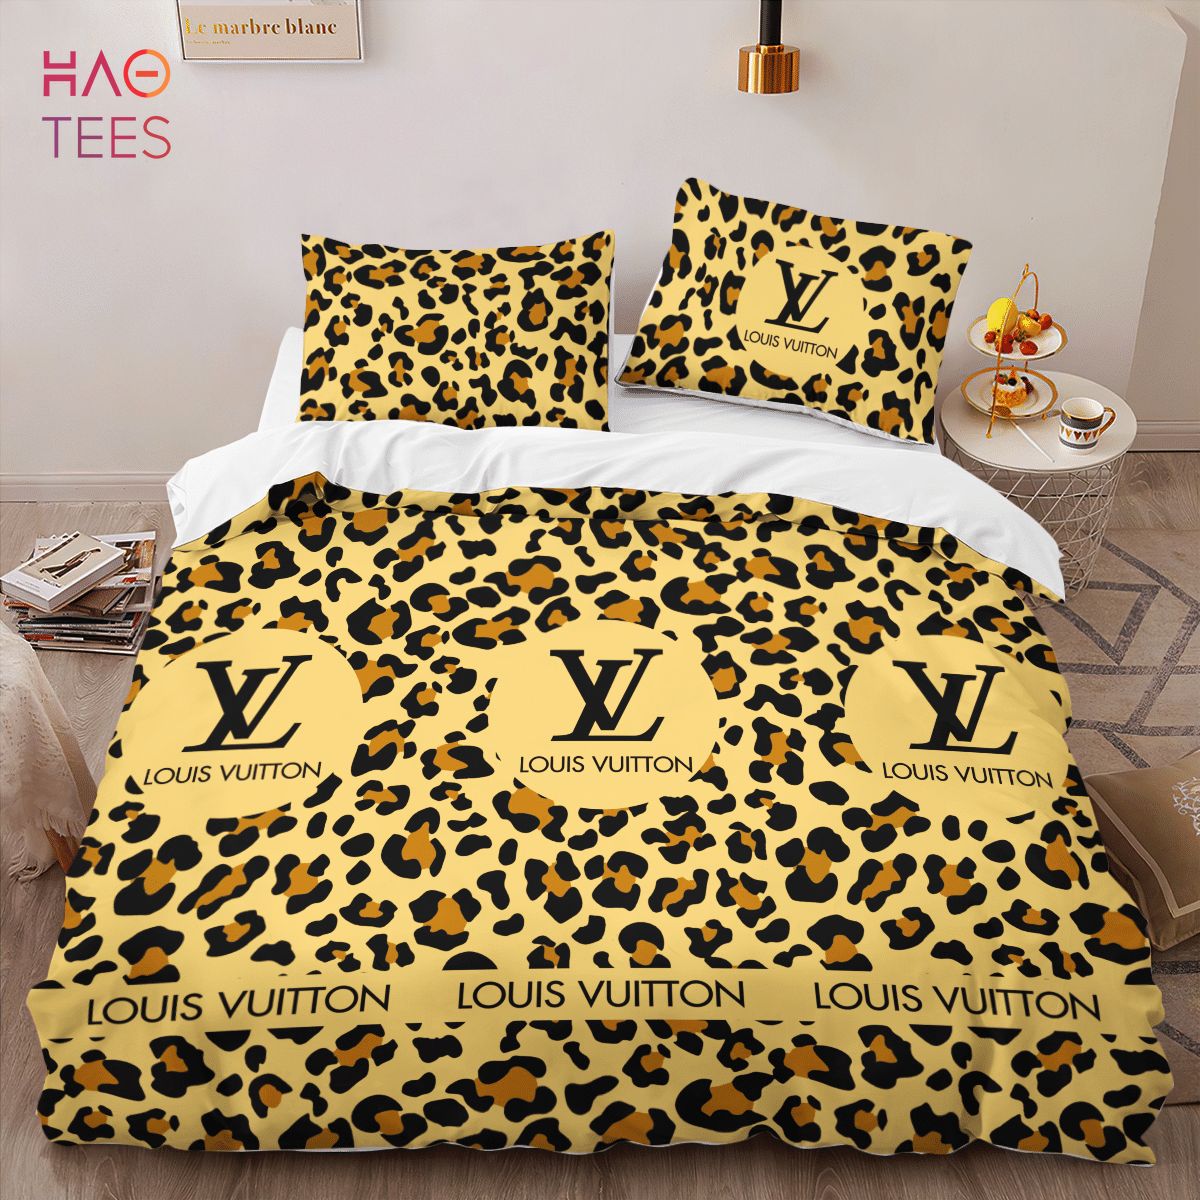 Trending] Louis Vuitton Leopard Luxury Bedding Set - Alishirts.com